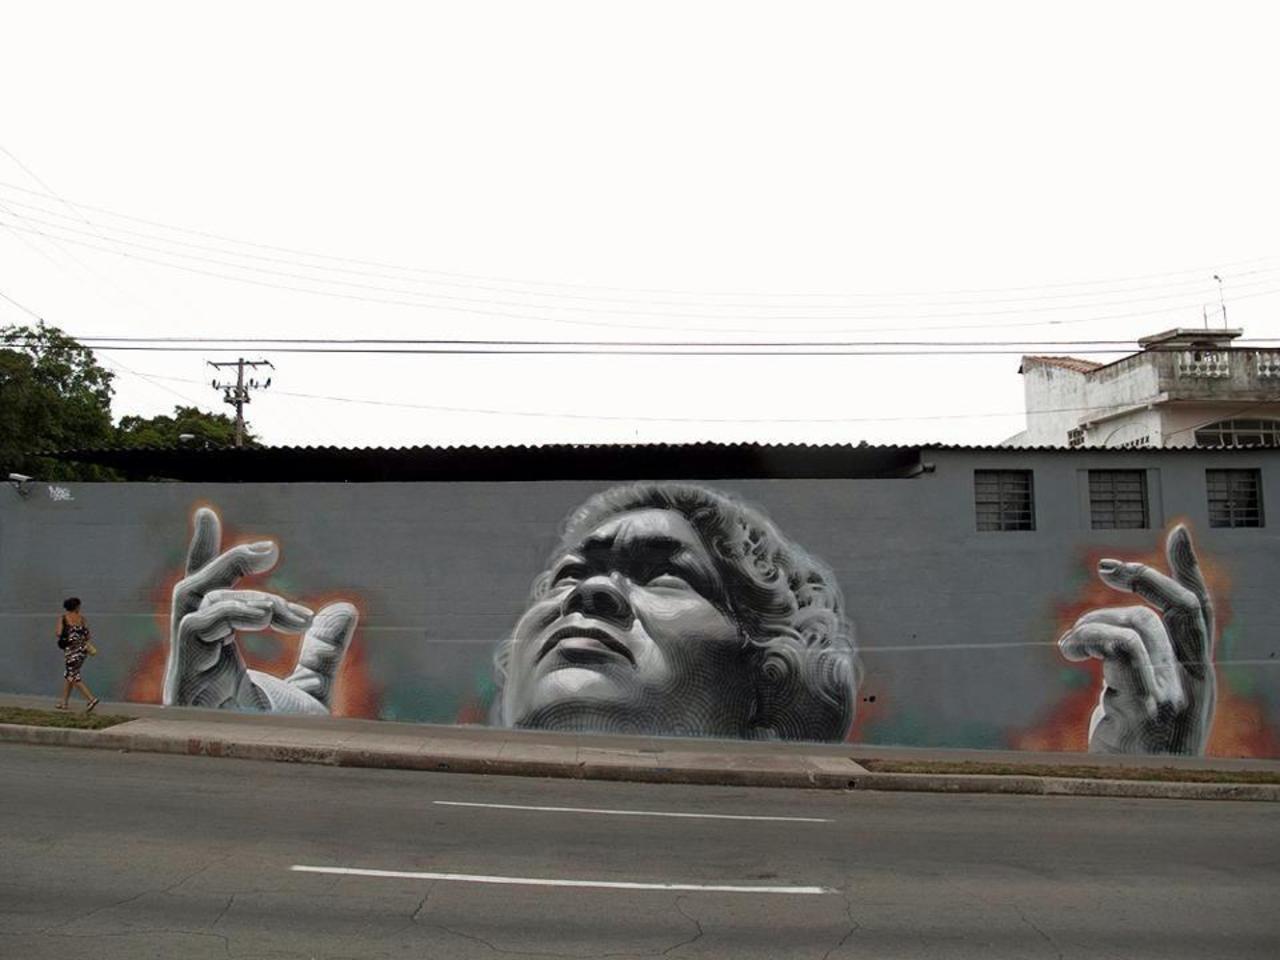 Artist 'El Mac' new Street Art mural located in Havana, Cuba #art #mural #graffiti #streetart http://t.co/x4pIYHeVuB